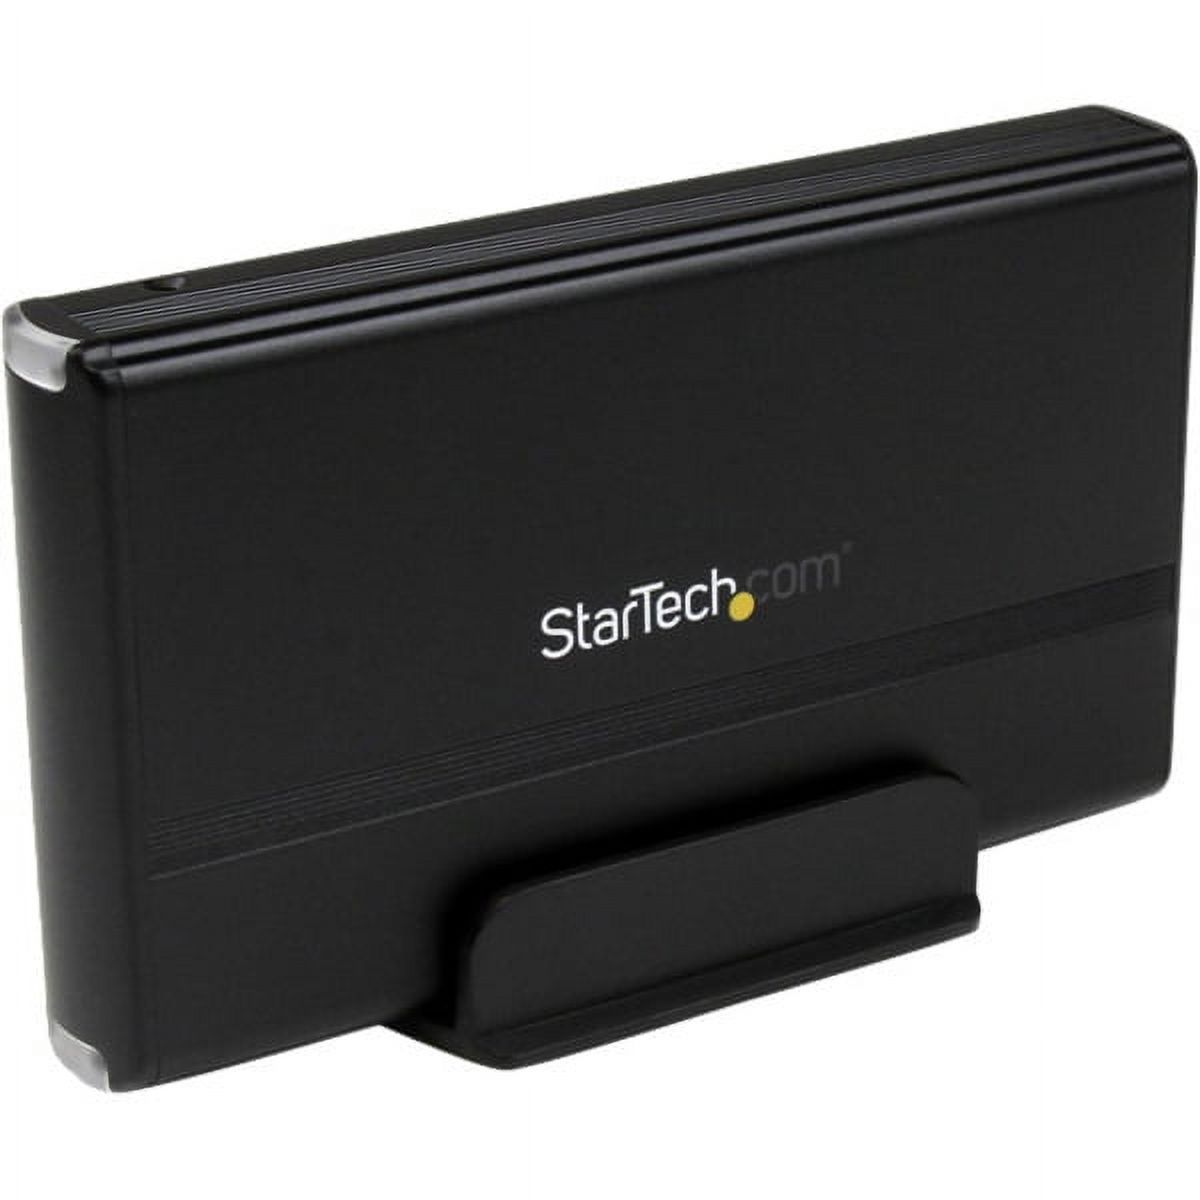 StarTech.com 3.5in USB 3.0 External IDE / SATA III Universal Hard Drive Enclosure, Portable External HDD - image 3 of 3